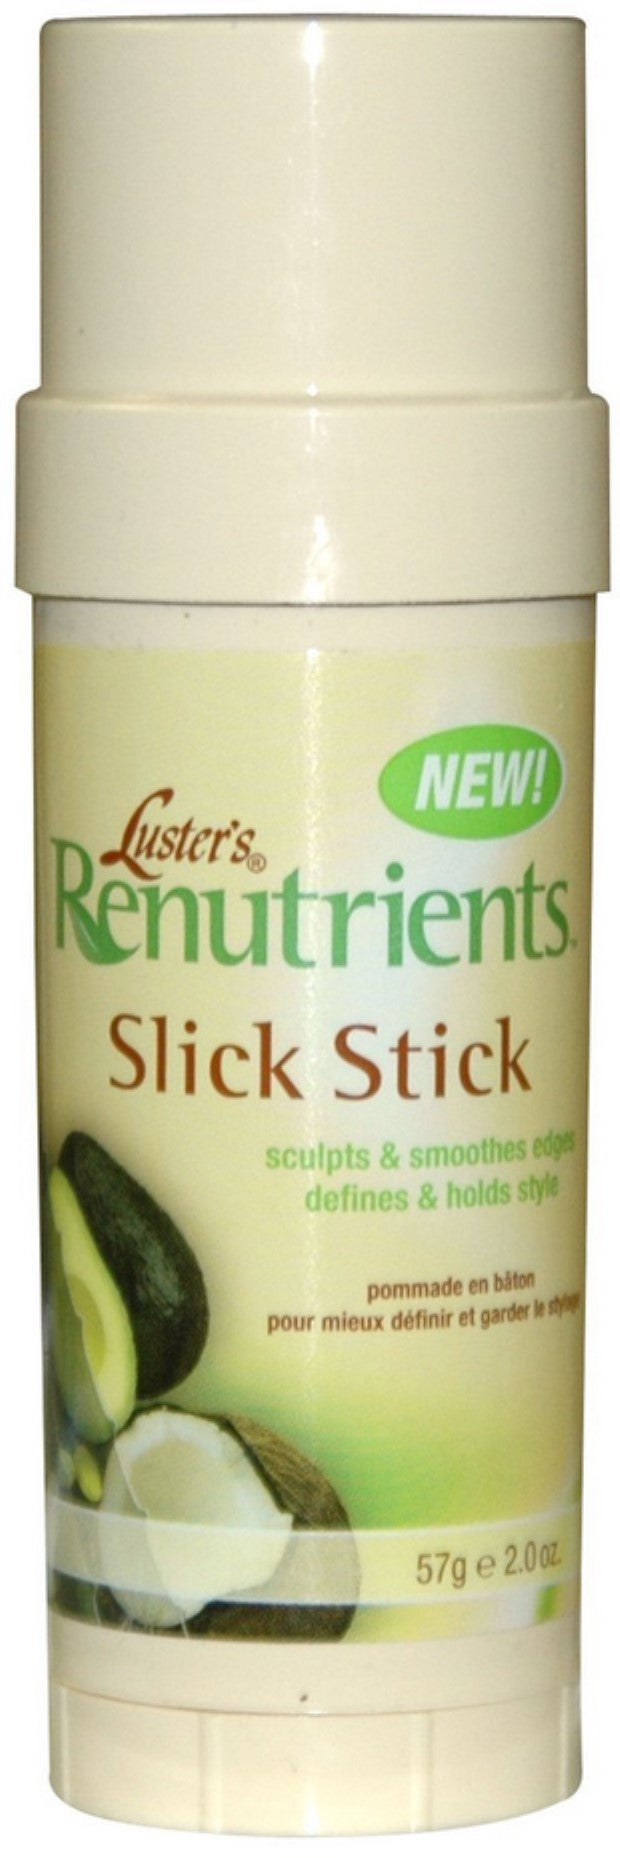 Luster's Renutrients Slick Stick for Hair, 2 oz - Olive Oil, Maximum Moisture